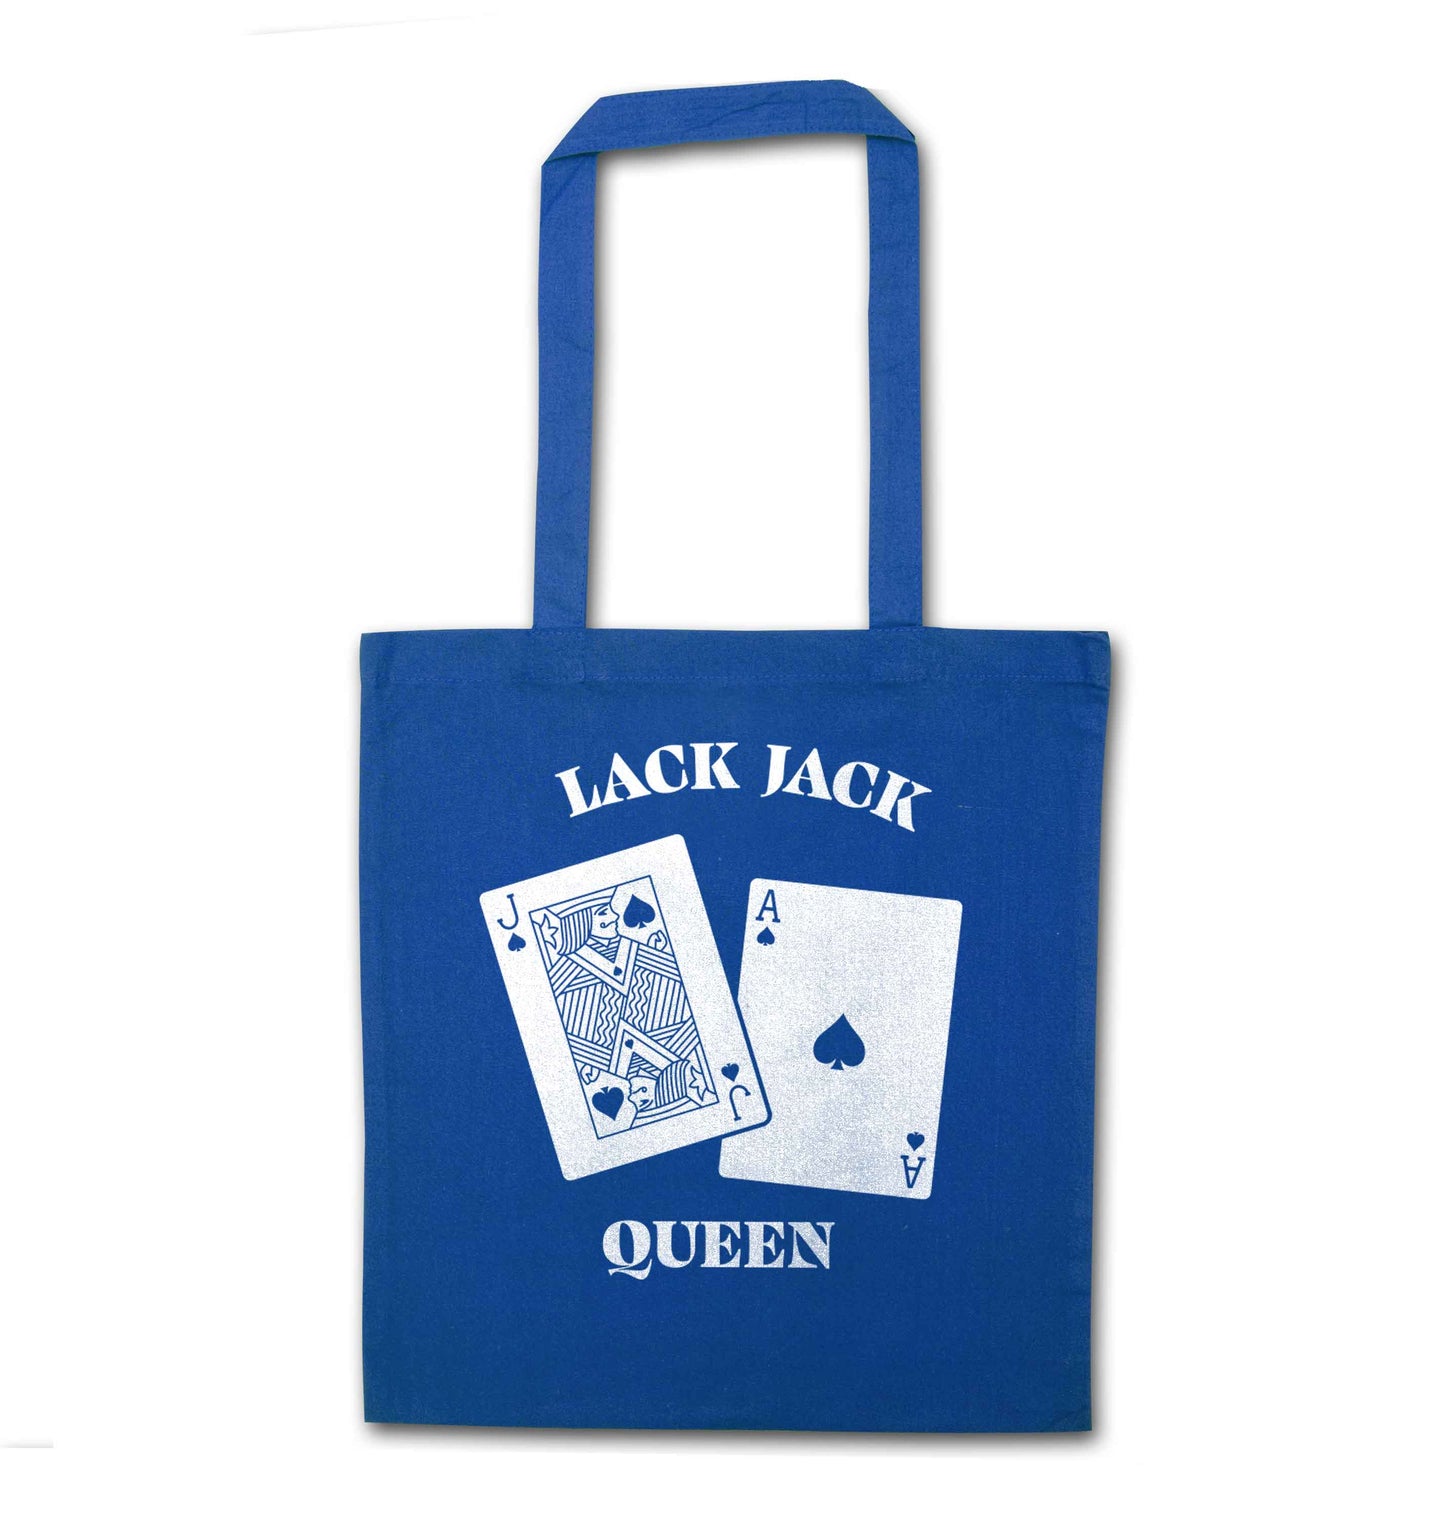 Blackjack queen blue tote bag